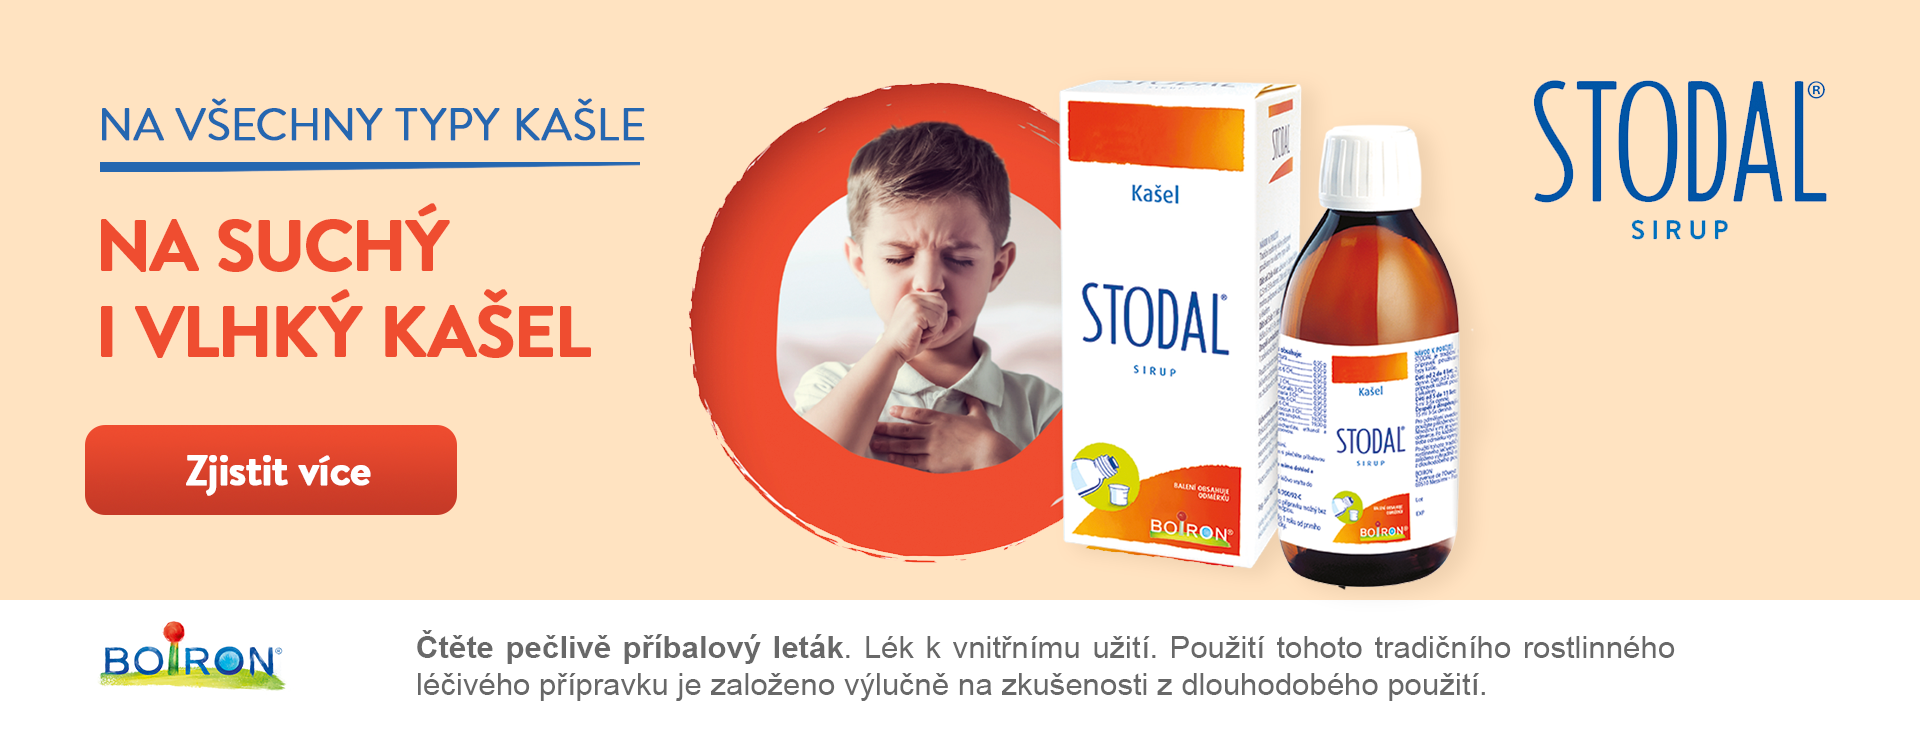 Onlinelekarna.cz | Stodal 